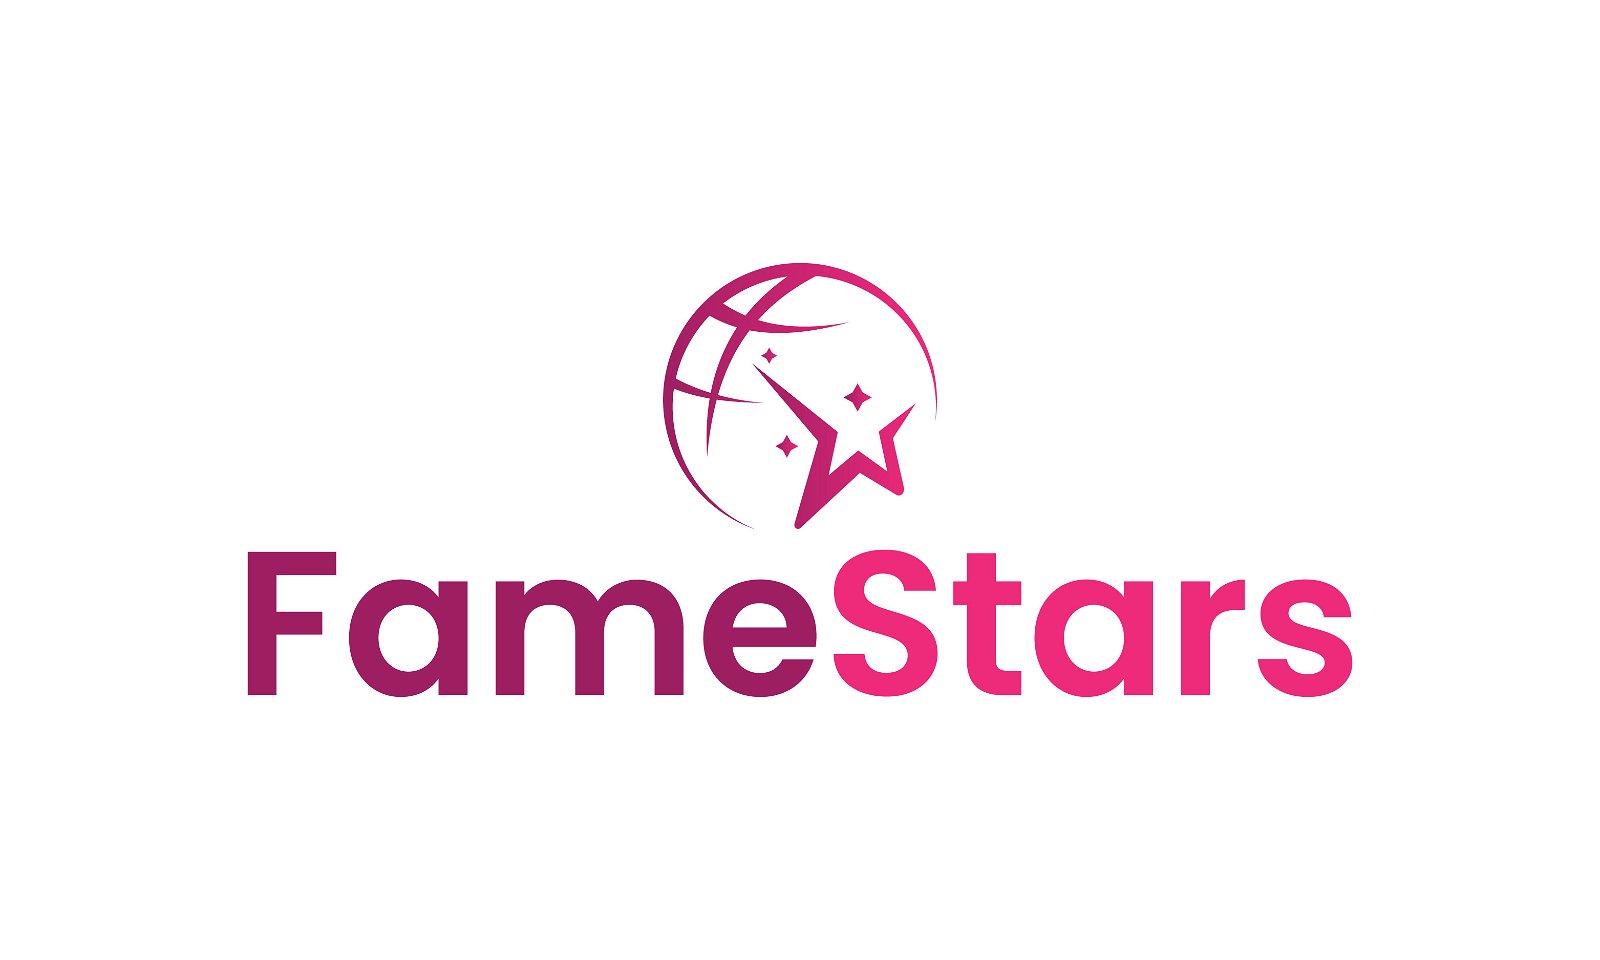 FameStars.com - Creative brandable domain for sale